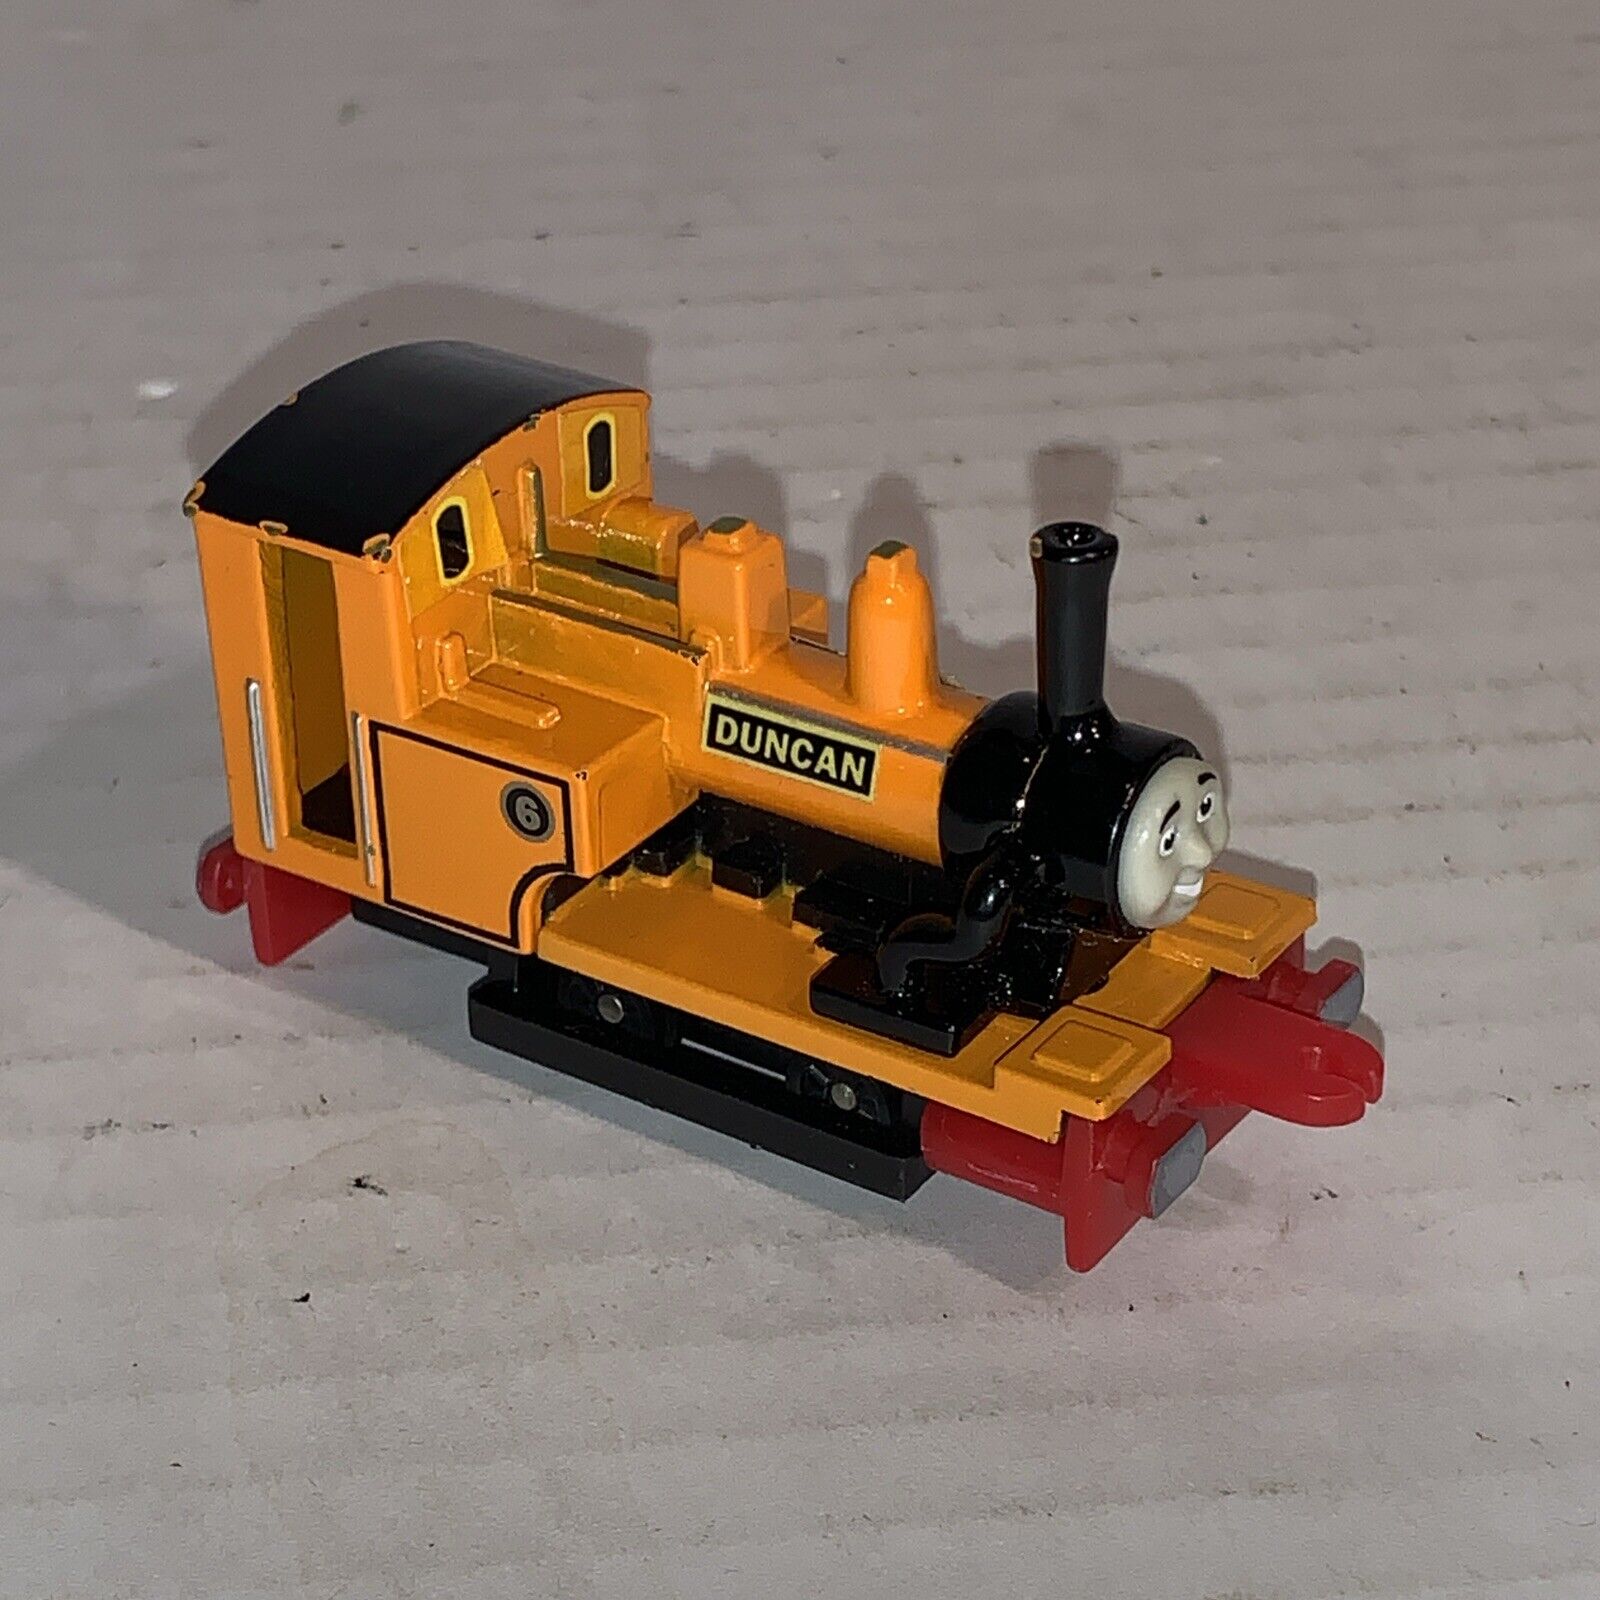 Duncan ERTL 1996 - Thomas The Tank Engine & Friends Diecast Train Vintage Toy